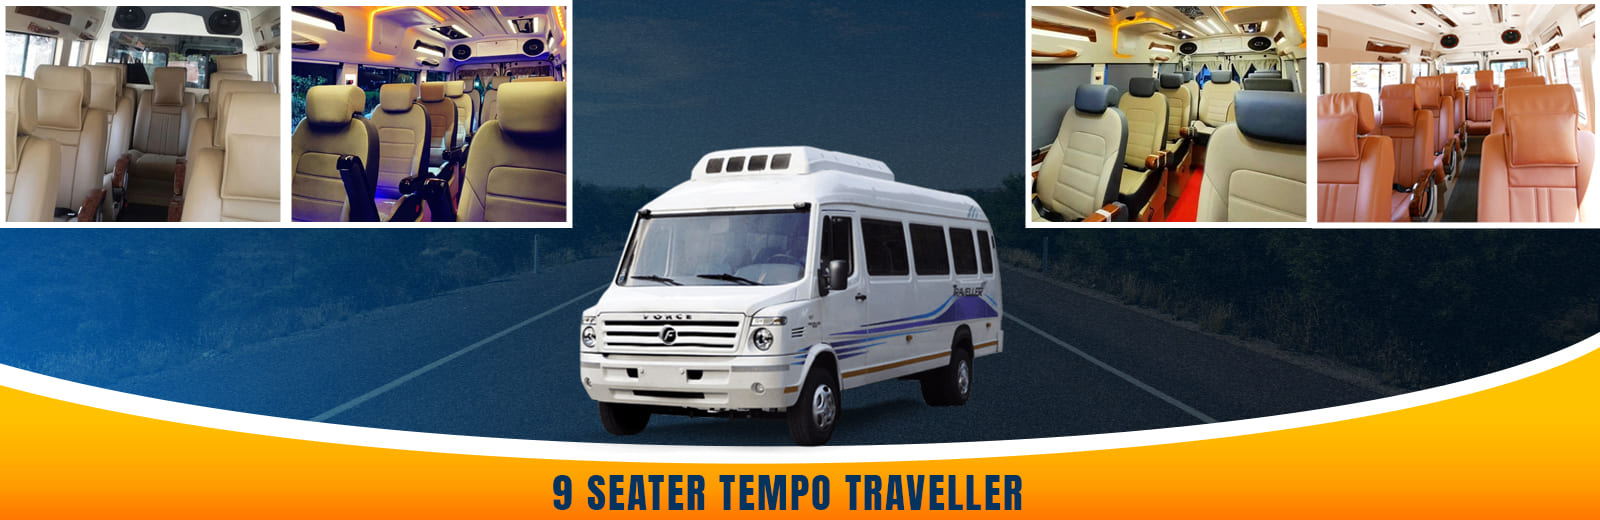 9 Seater Tempo Traveller